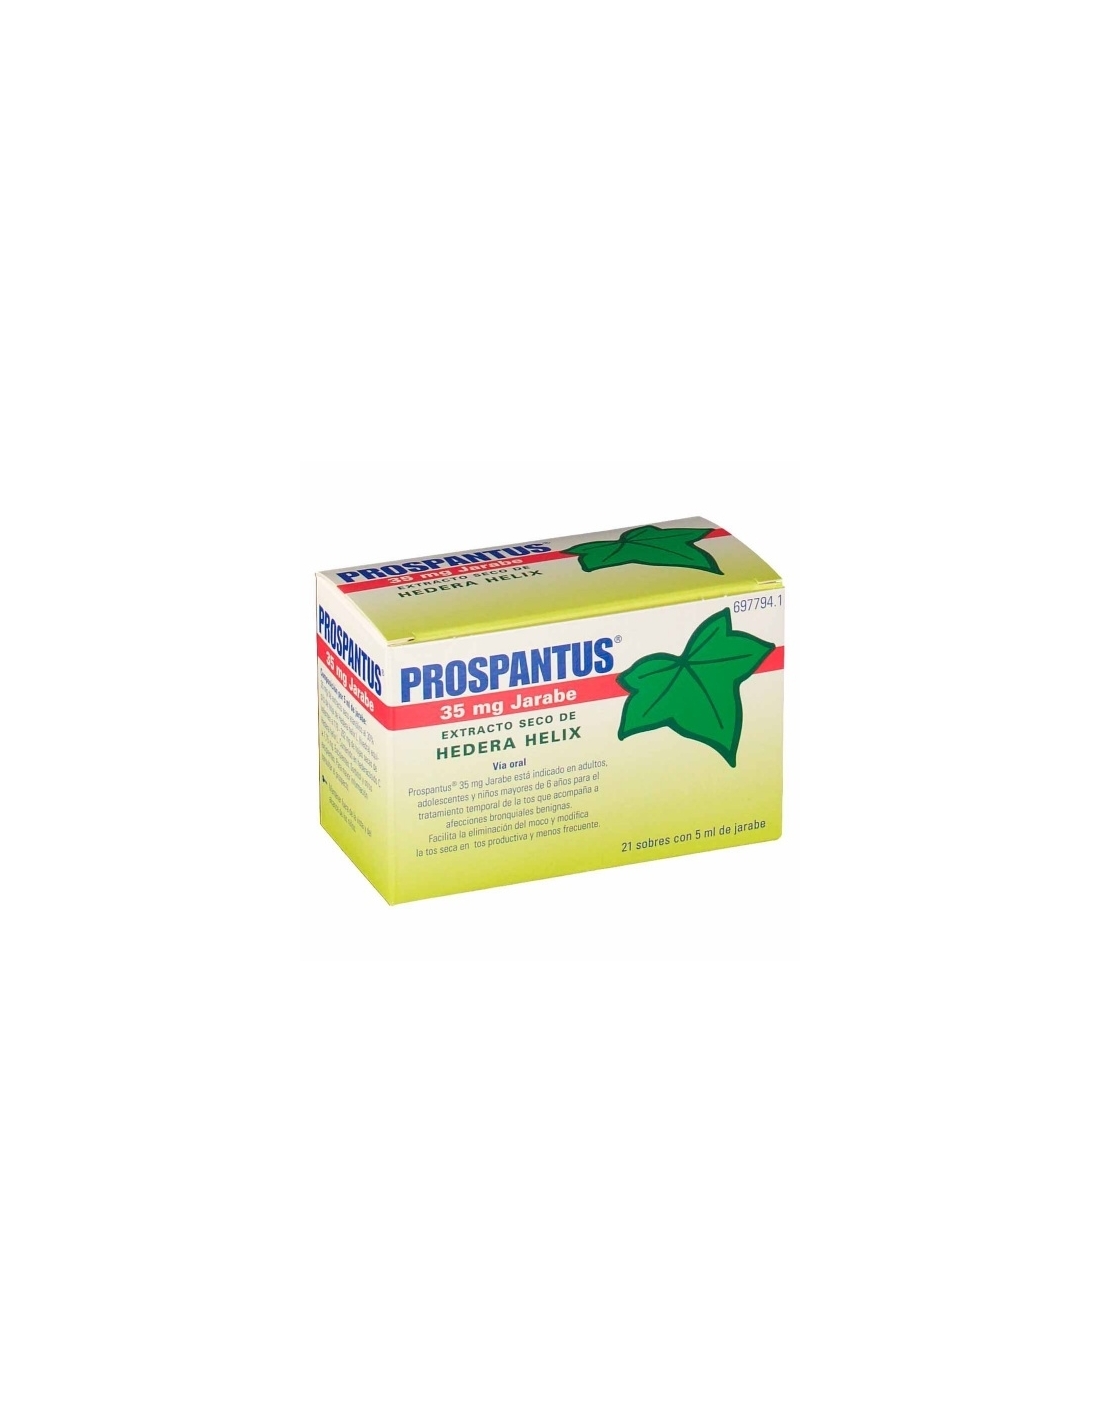 Prospantus jarabe: expectorante para tos productiva. Elimina mucosidad